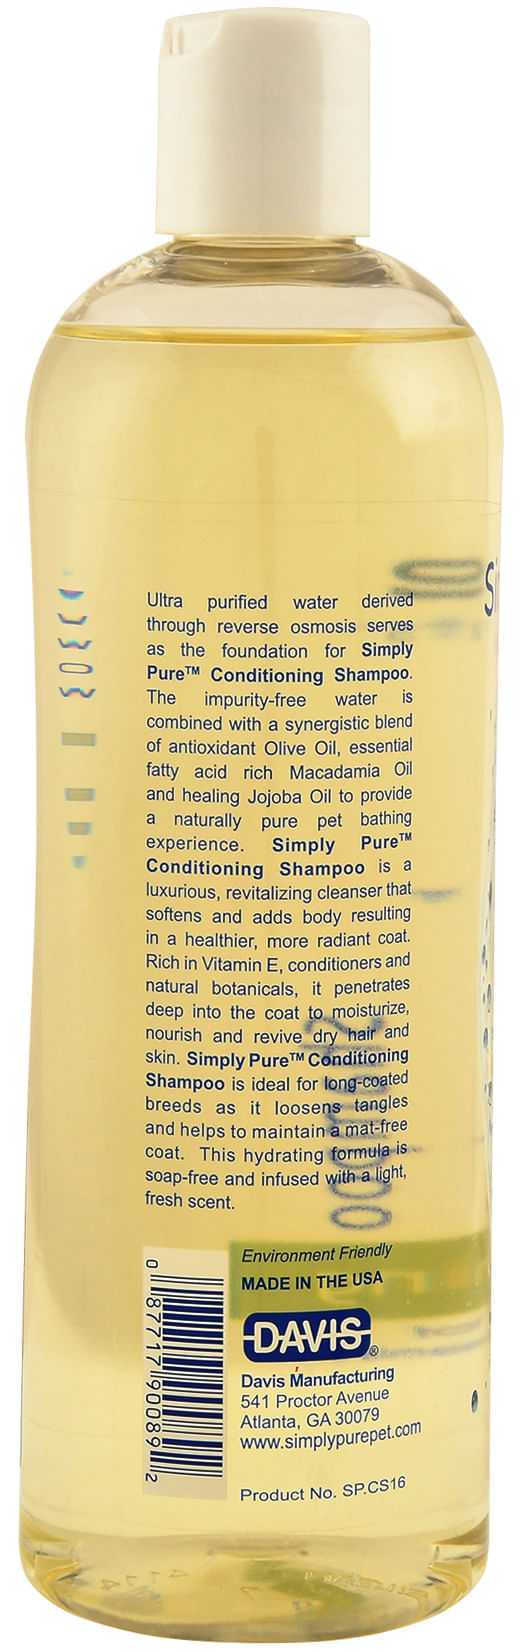 Simply-Pure-Conditioning-Shampoo-16-oz-RTU